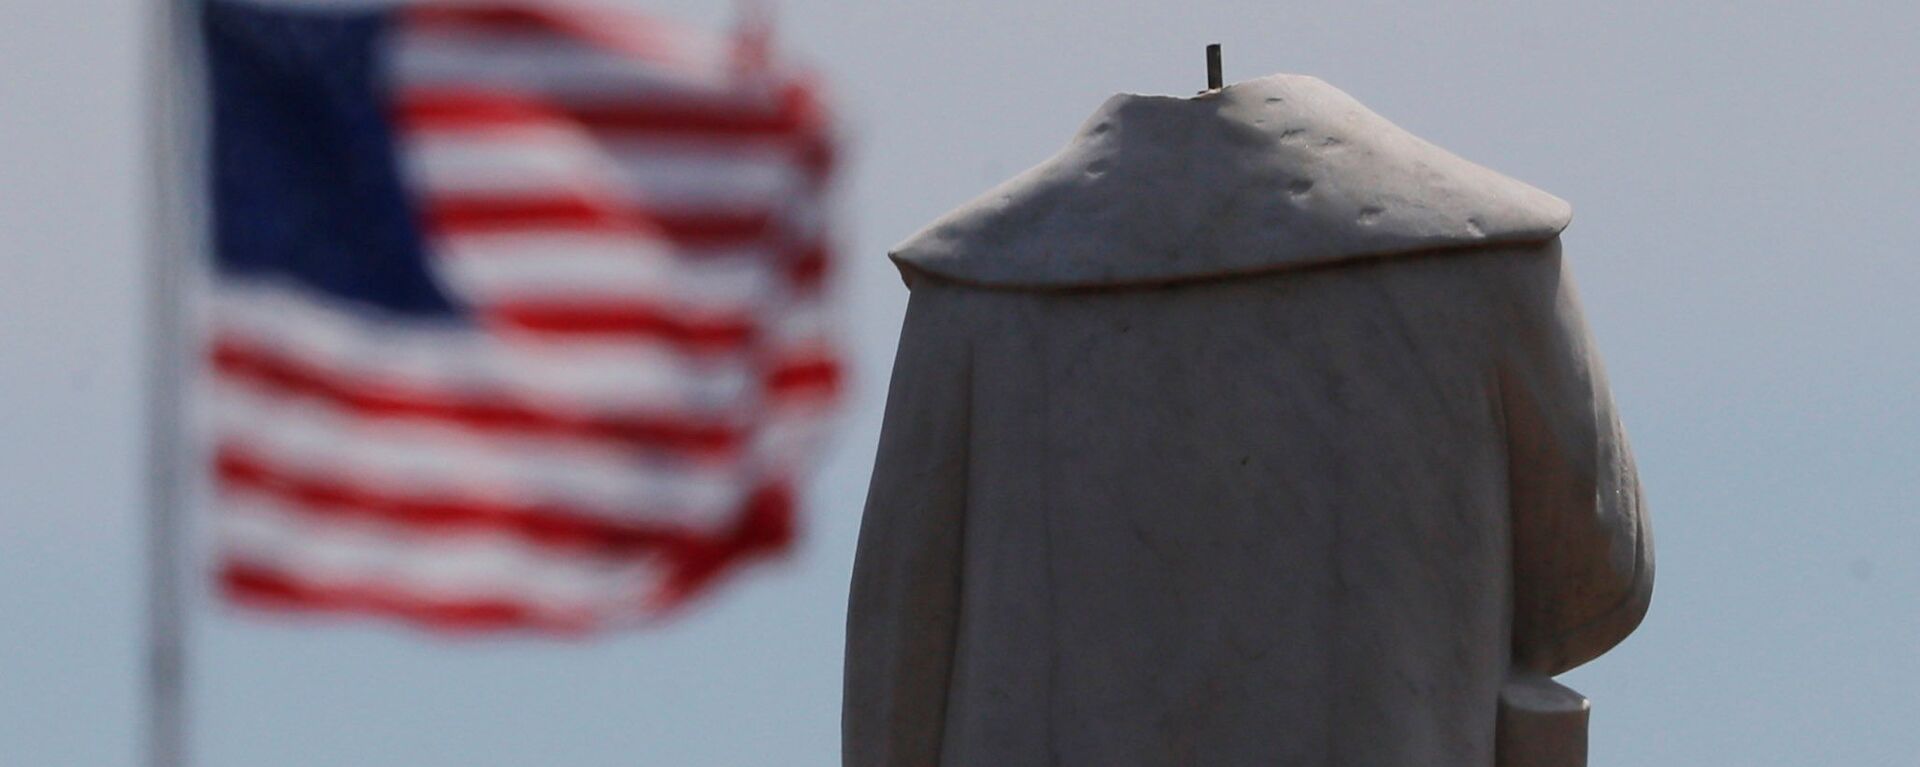 Протестующие обезглавили монумент первооткрывателя Америки Христофора Колумба в Бостоне - Sputnik Латвия, 1920, 14.06.2020